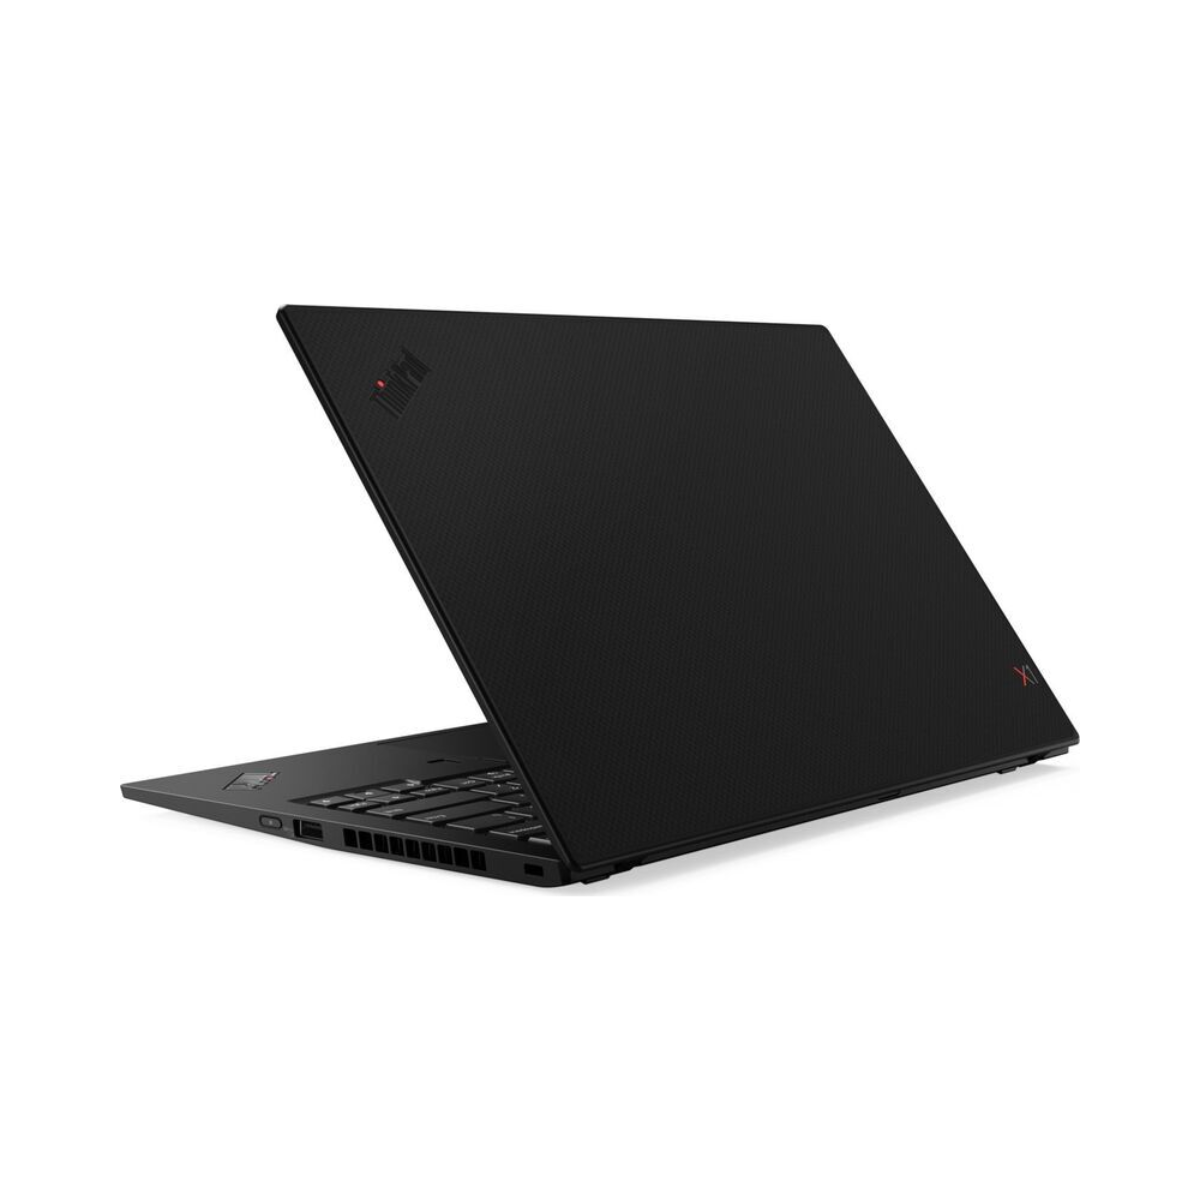 Lenovo ThinkPad X1 Carbon G7 i7 (8th Gen) 16GB RAM 256GB SSD 14